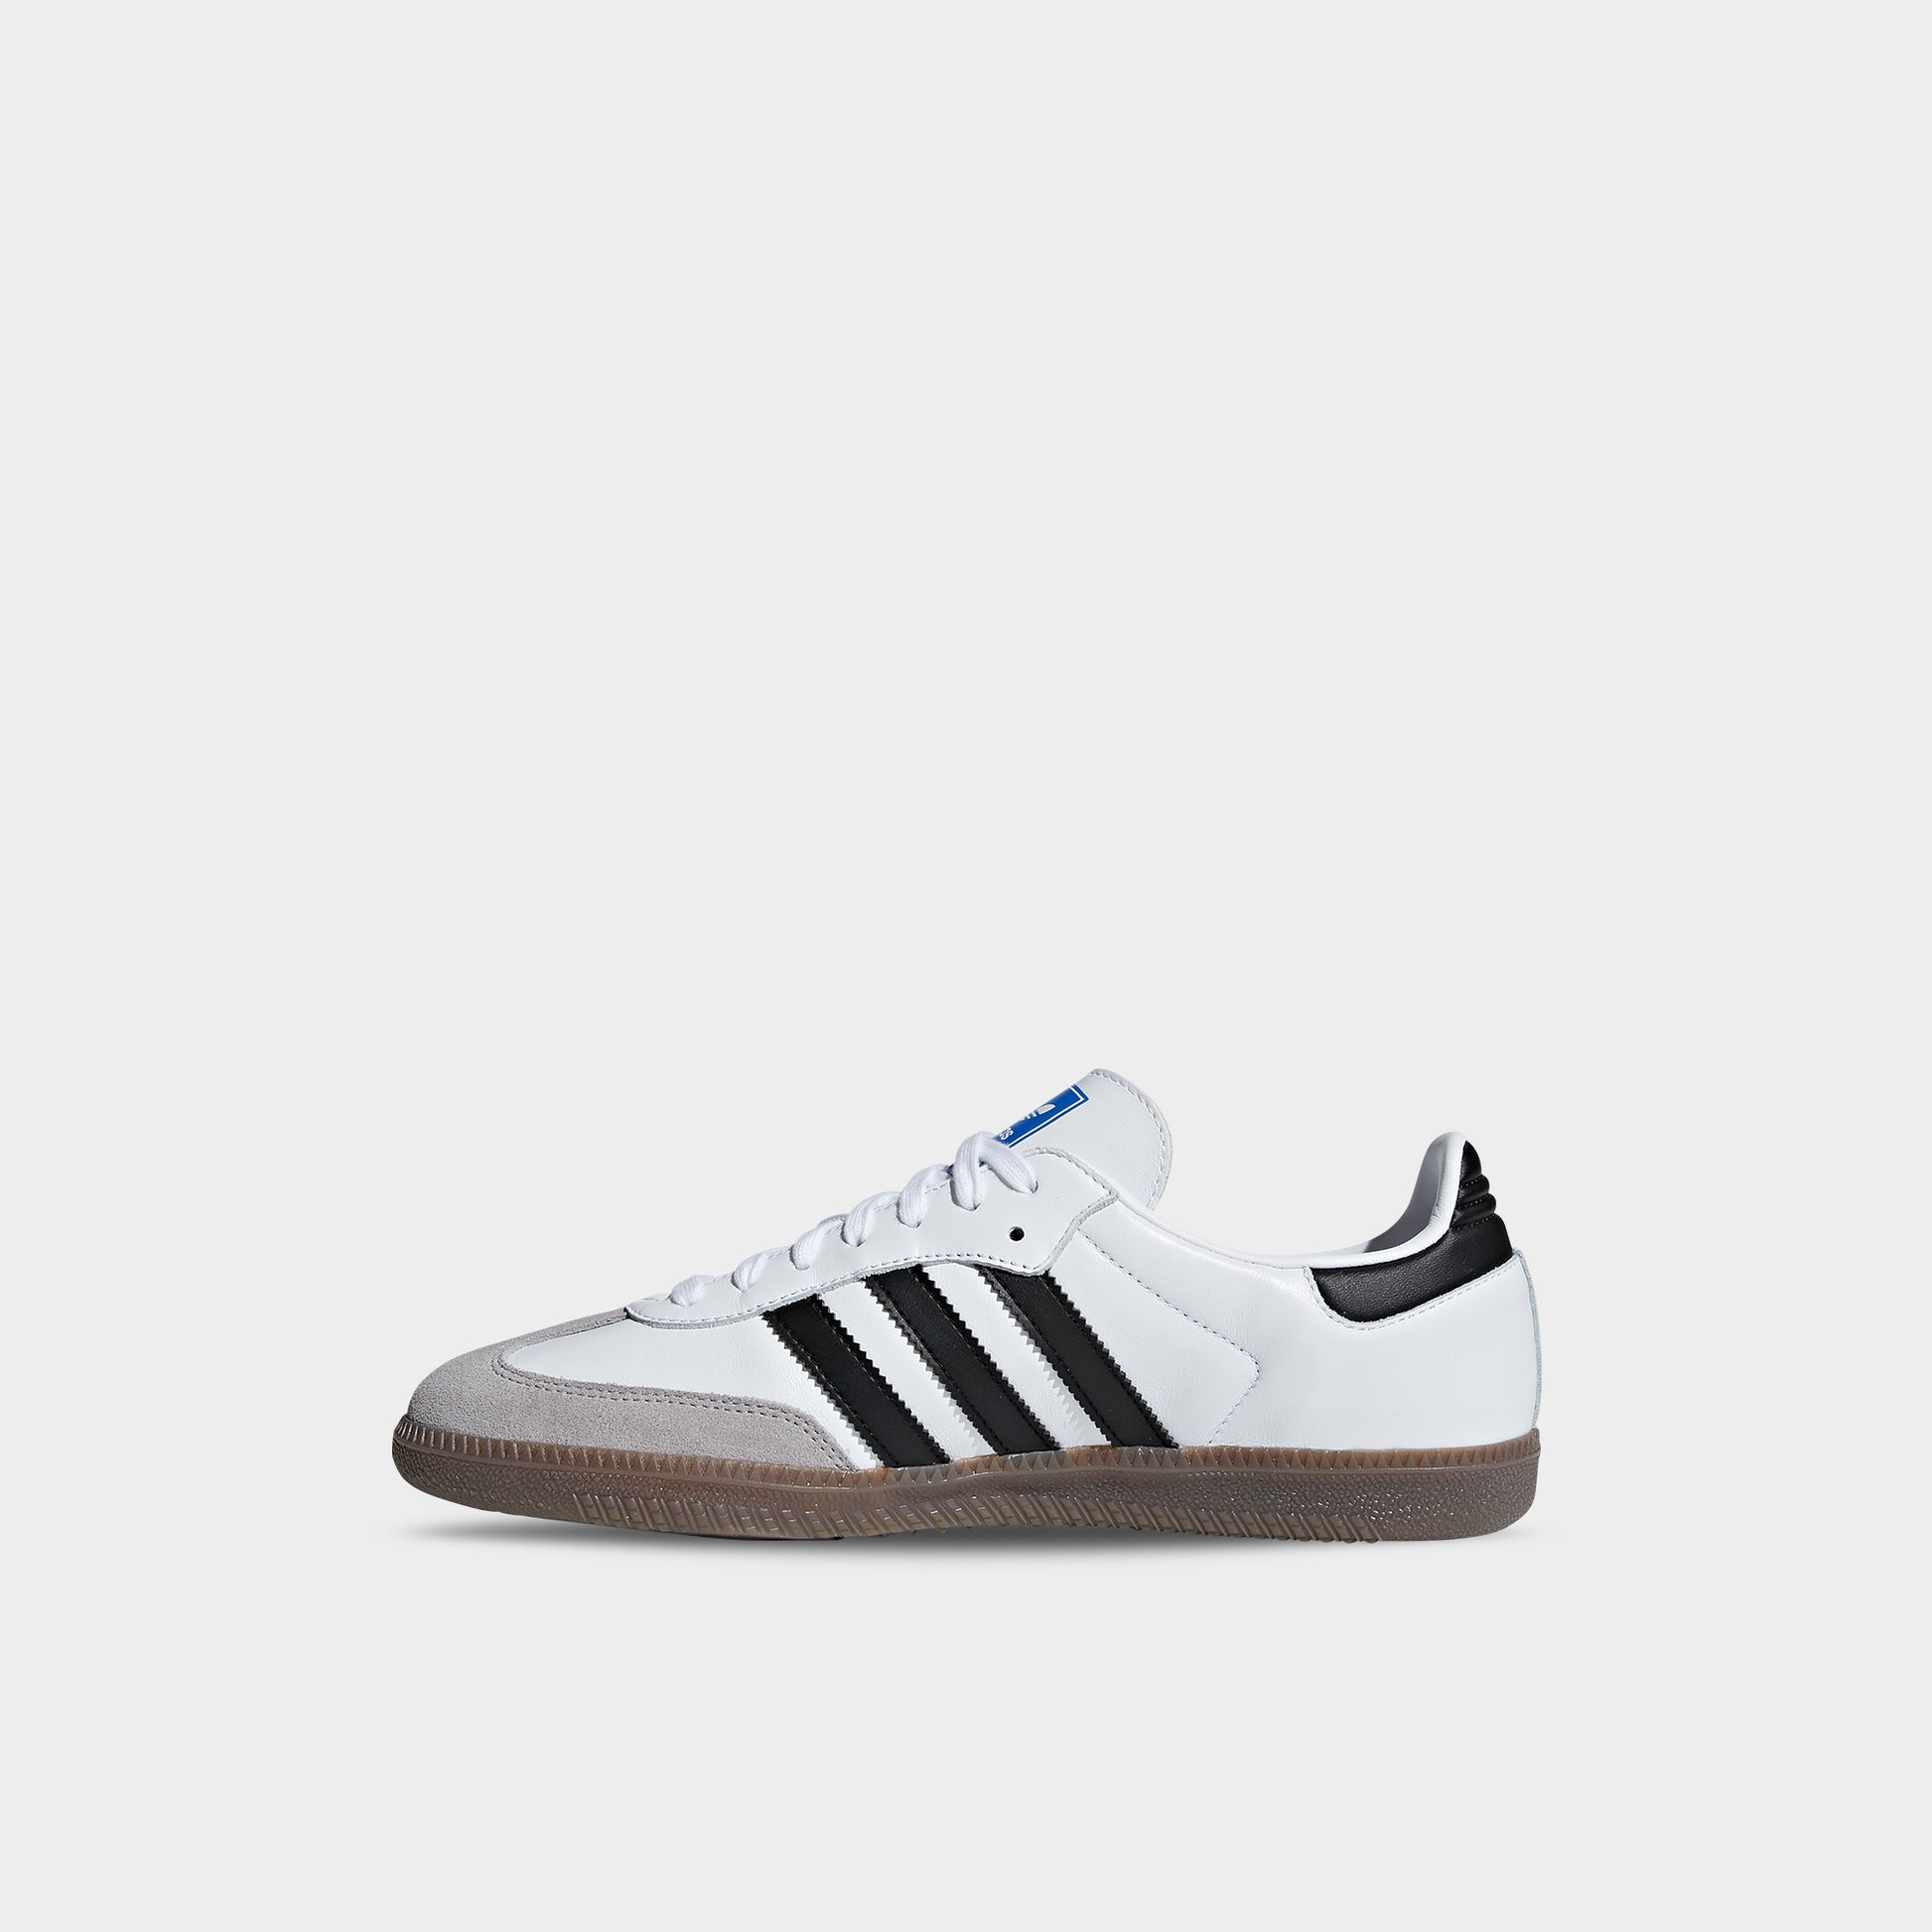 Adidas Samba OG B75806 in Farbe white_black